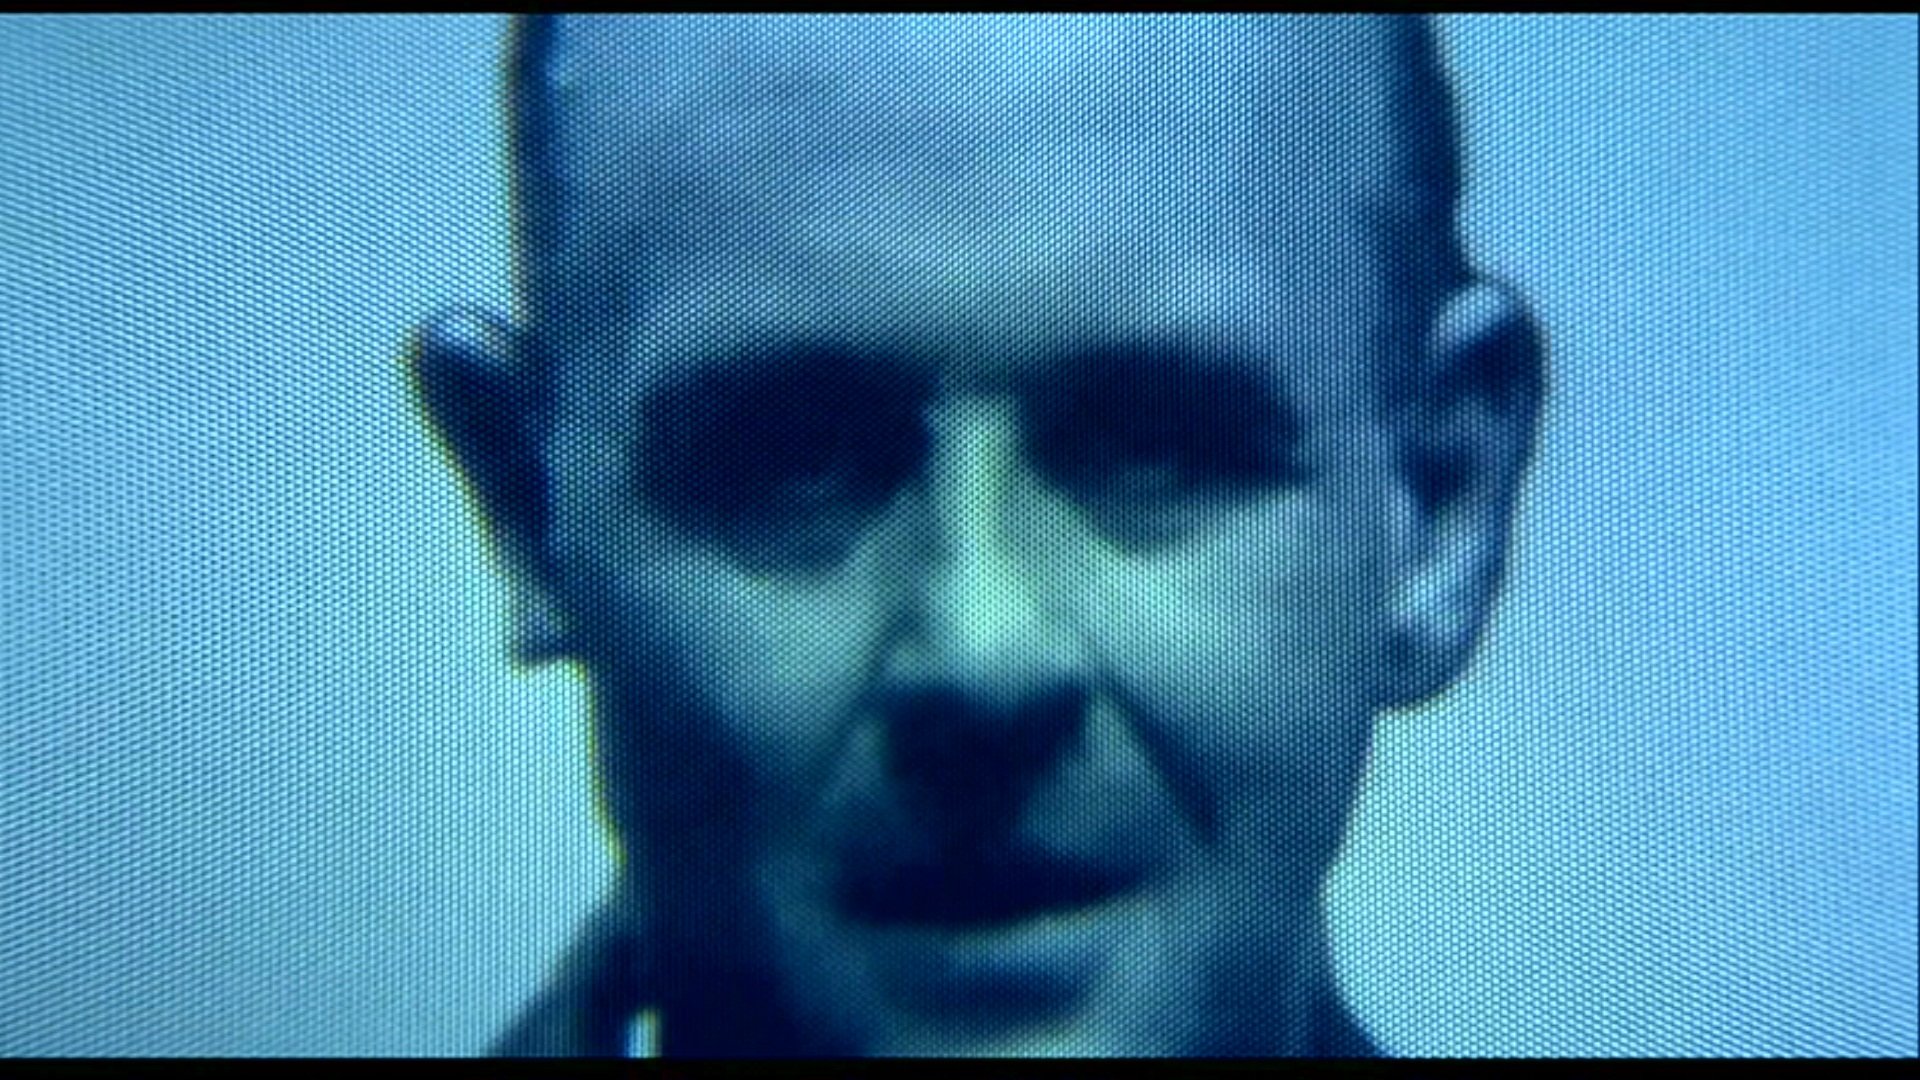 Hannibal Lecter wallpapers 1920x1080 Full HD (1080p) desktop backgrounds